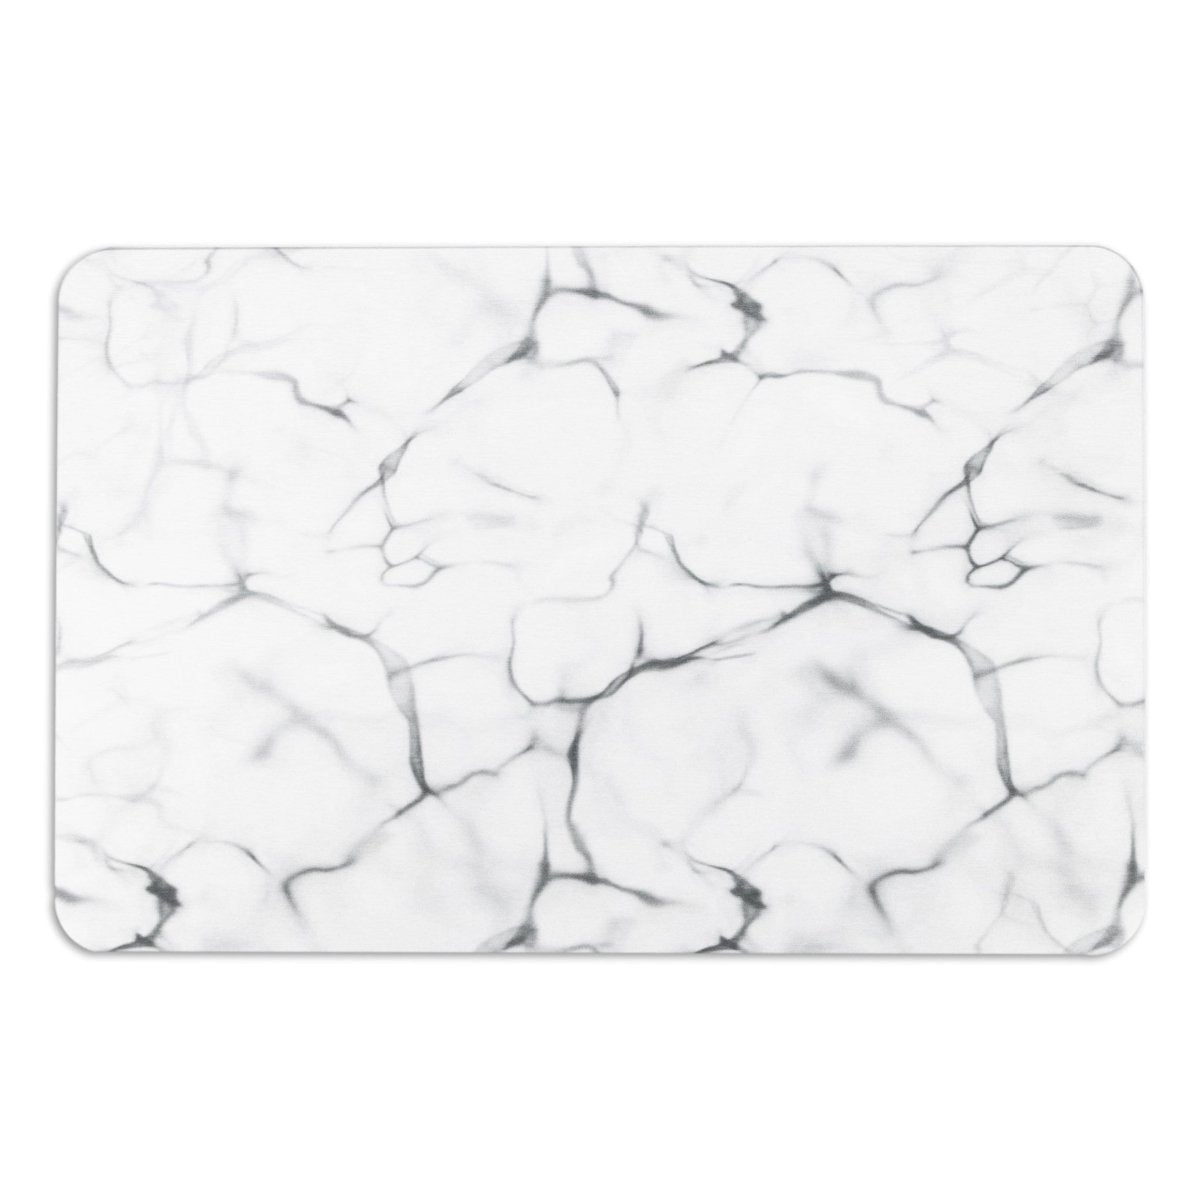 Marble Pattern Bathmat - Marble Print - Black and Gray Natural Stone Look - Bath or Shower Mat - White Stone Non Slip Bath Mat - Slips Away - 1344552761 -